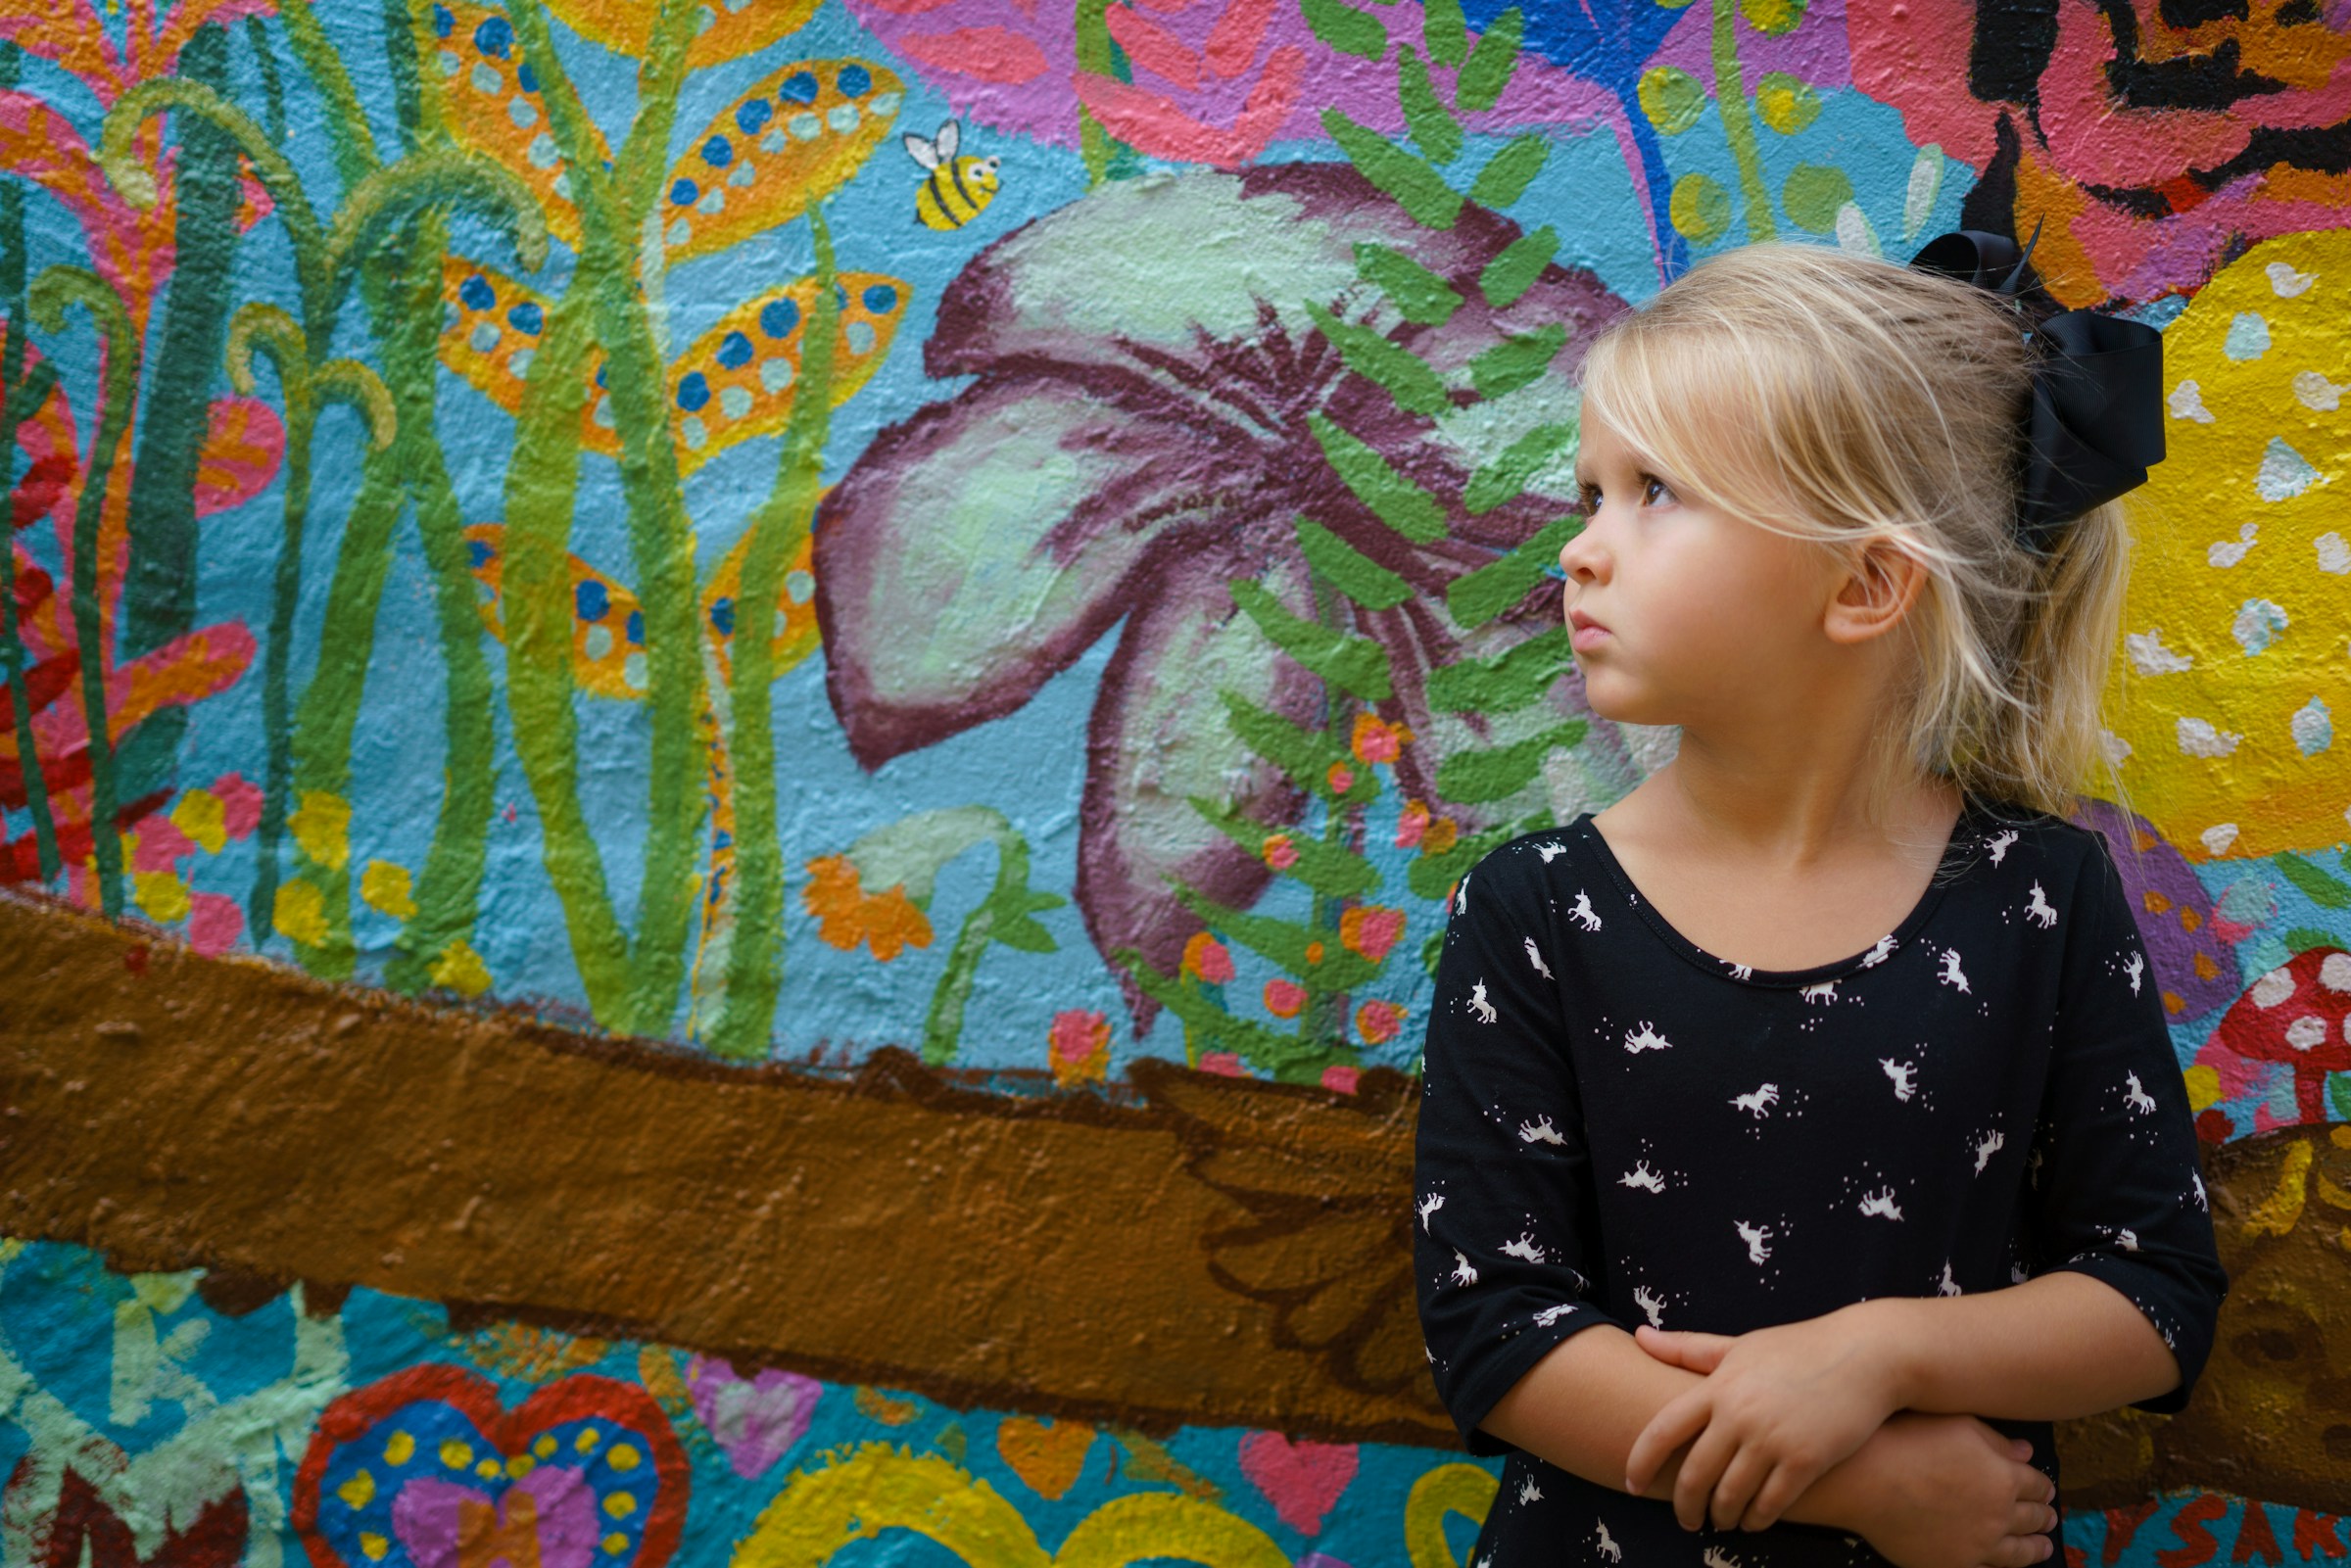 Little girl against a floral background | Source: Unsplash